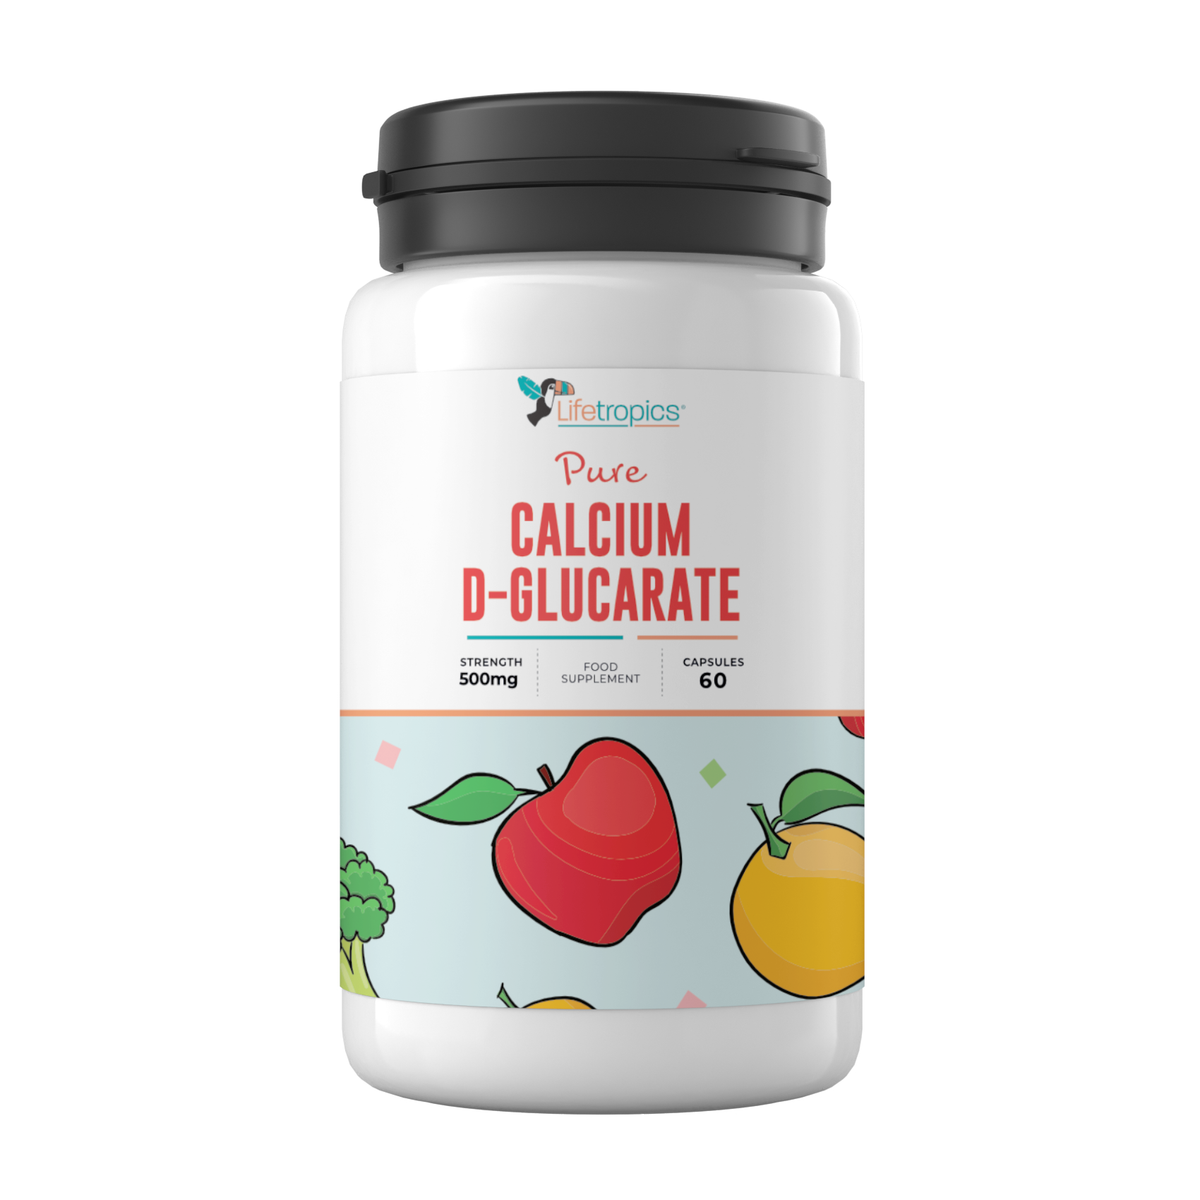 Pure Calcium D-Glucarate